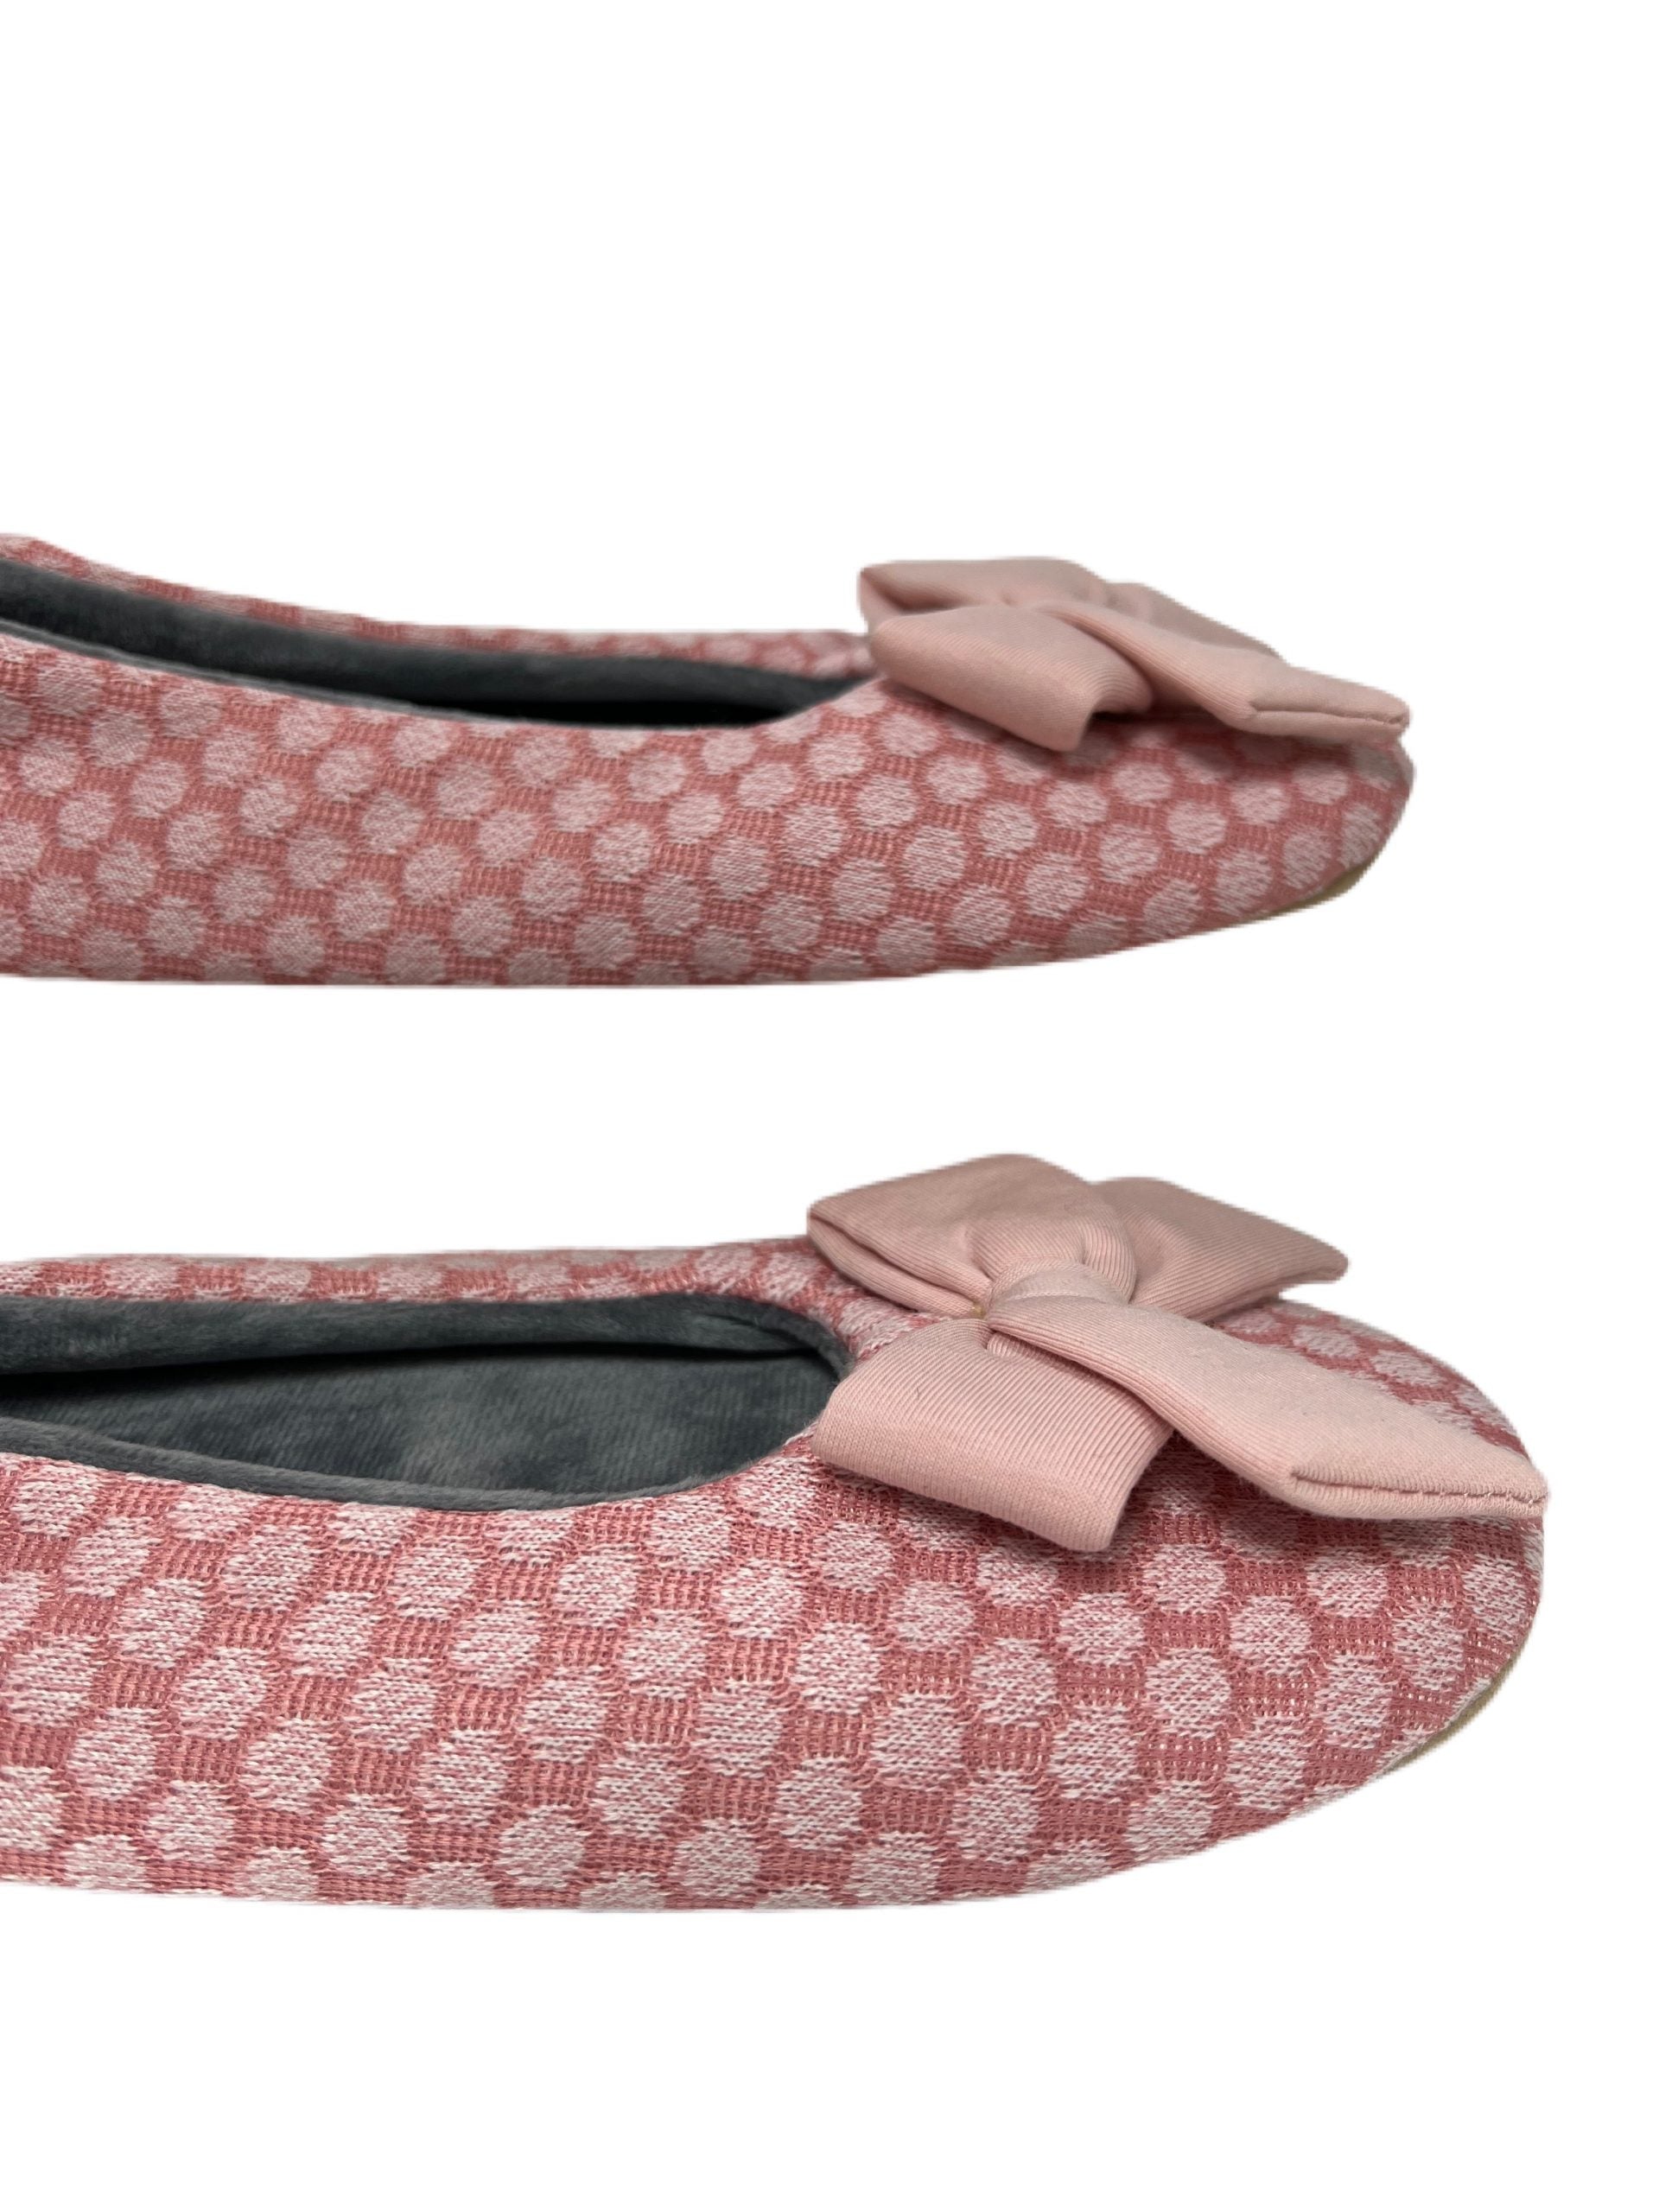 Bramble Ladies Grey Ballerina Slipper Socks | Grey Soft Knit Fleece Lining  - Cosy Warm Comfort Lounge Slippers | Non-Slip - Added Cushioning | UK Size  S-M: Amazon.co.uk: Fashion